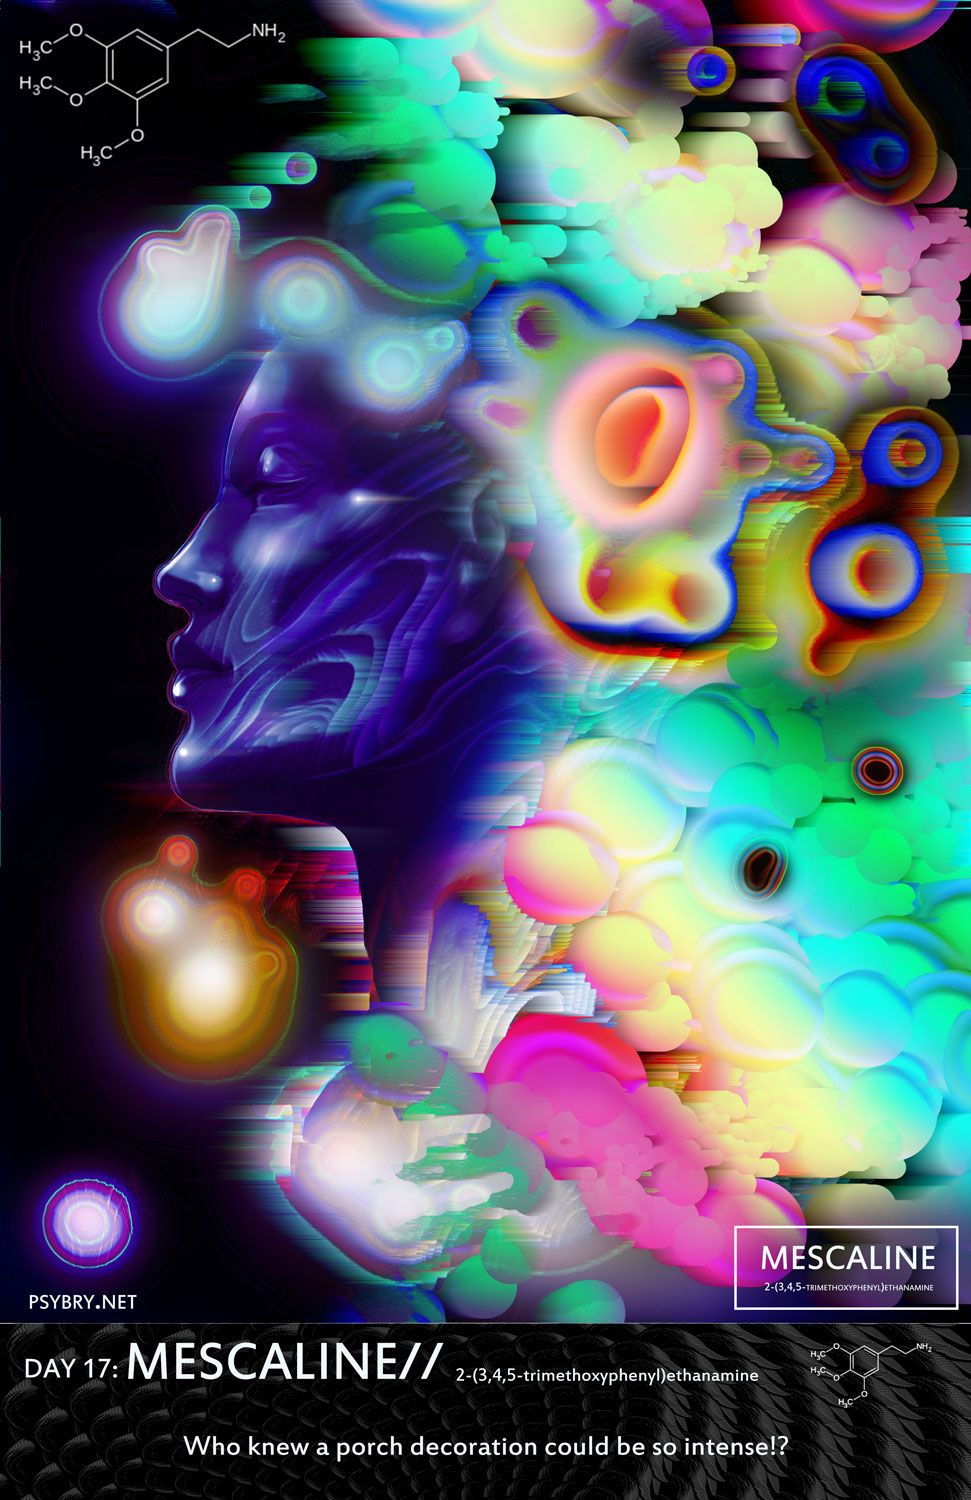 lsd alcohol cannabis cocaine Mushrooms mdma Ectasy DMT psychedelic Drugs photoshop pixel-pusha